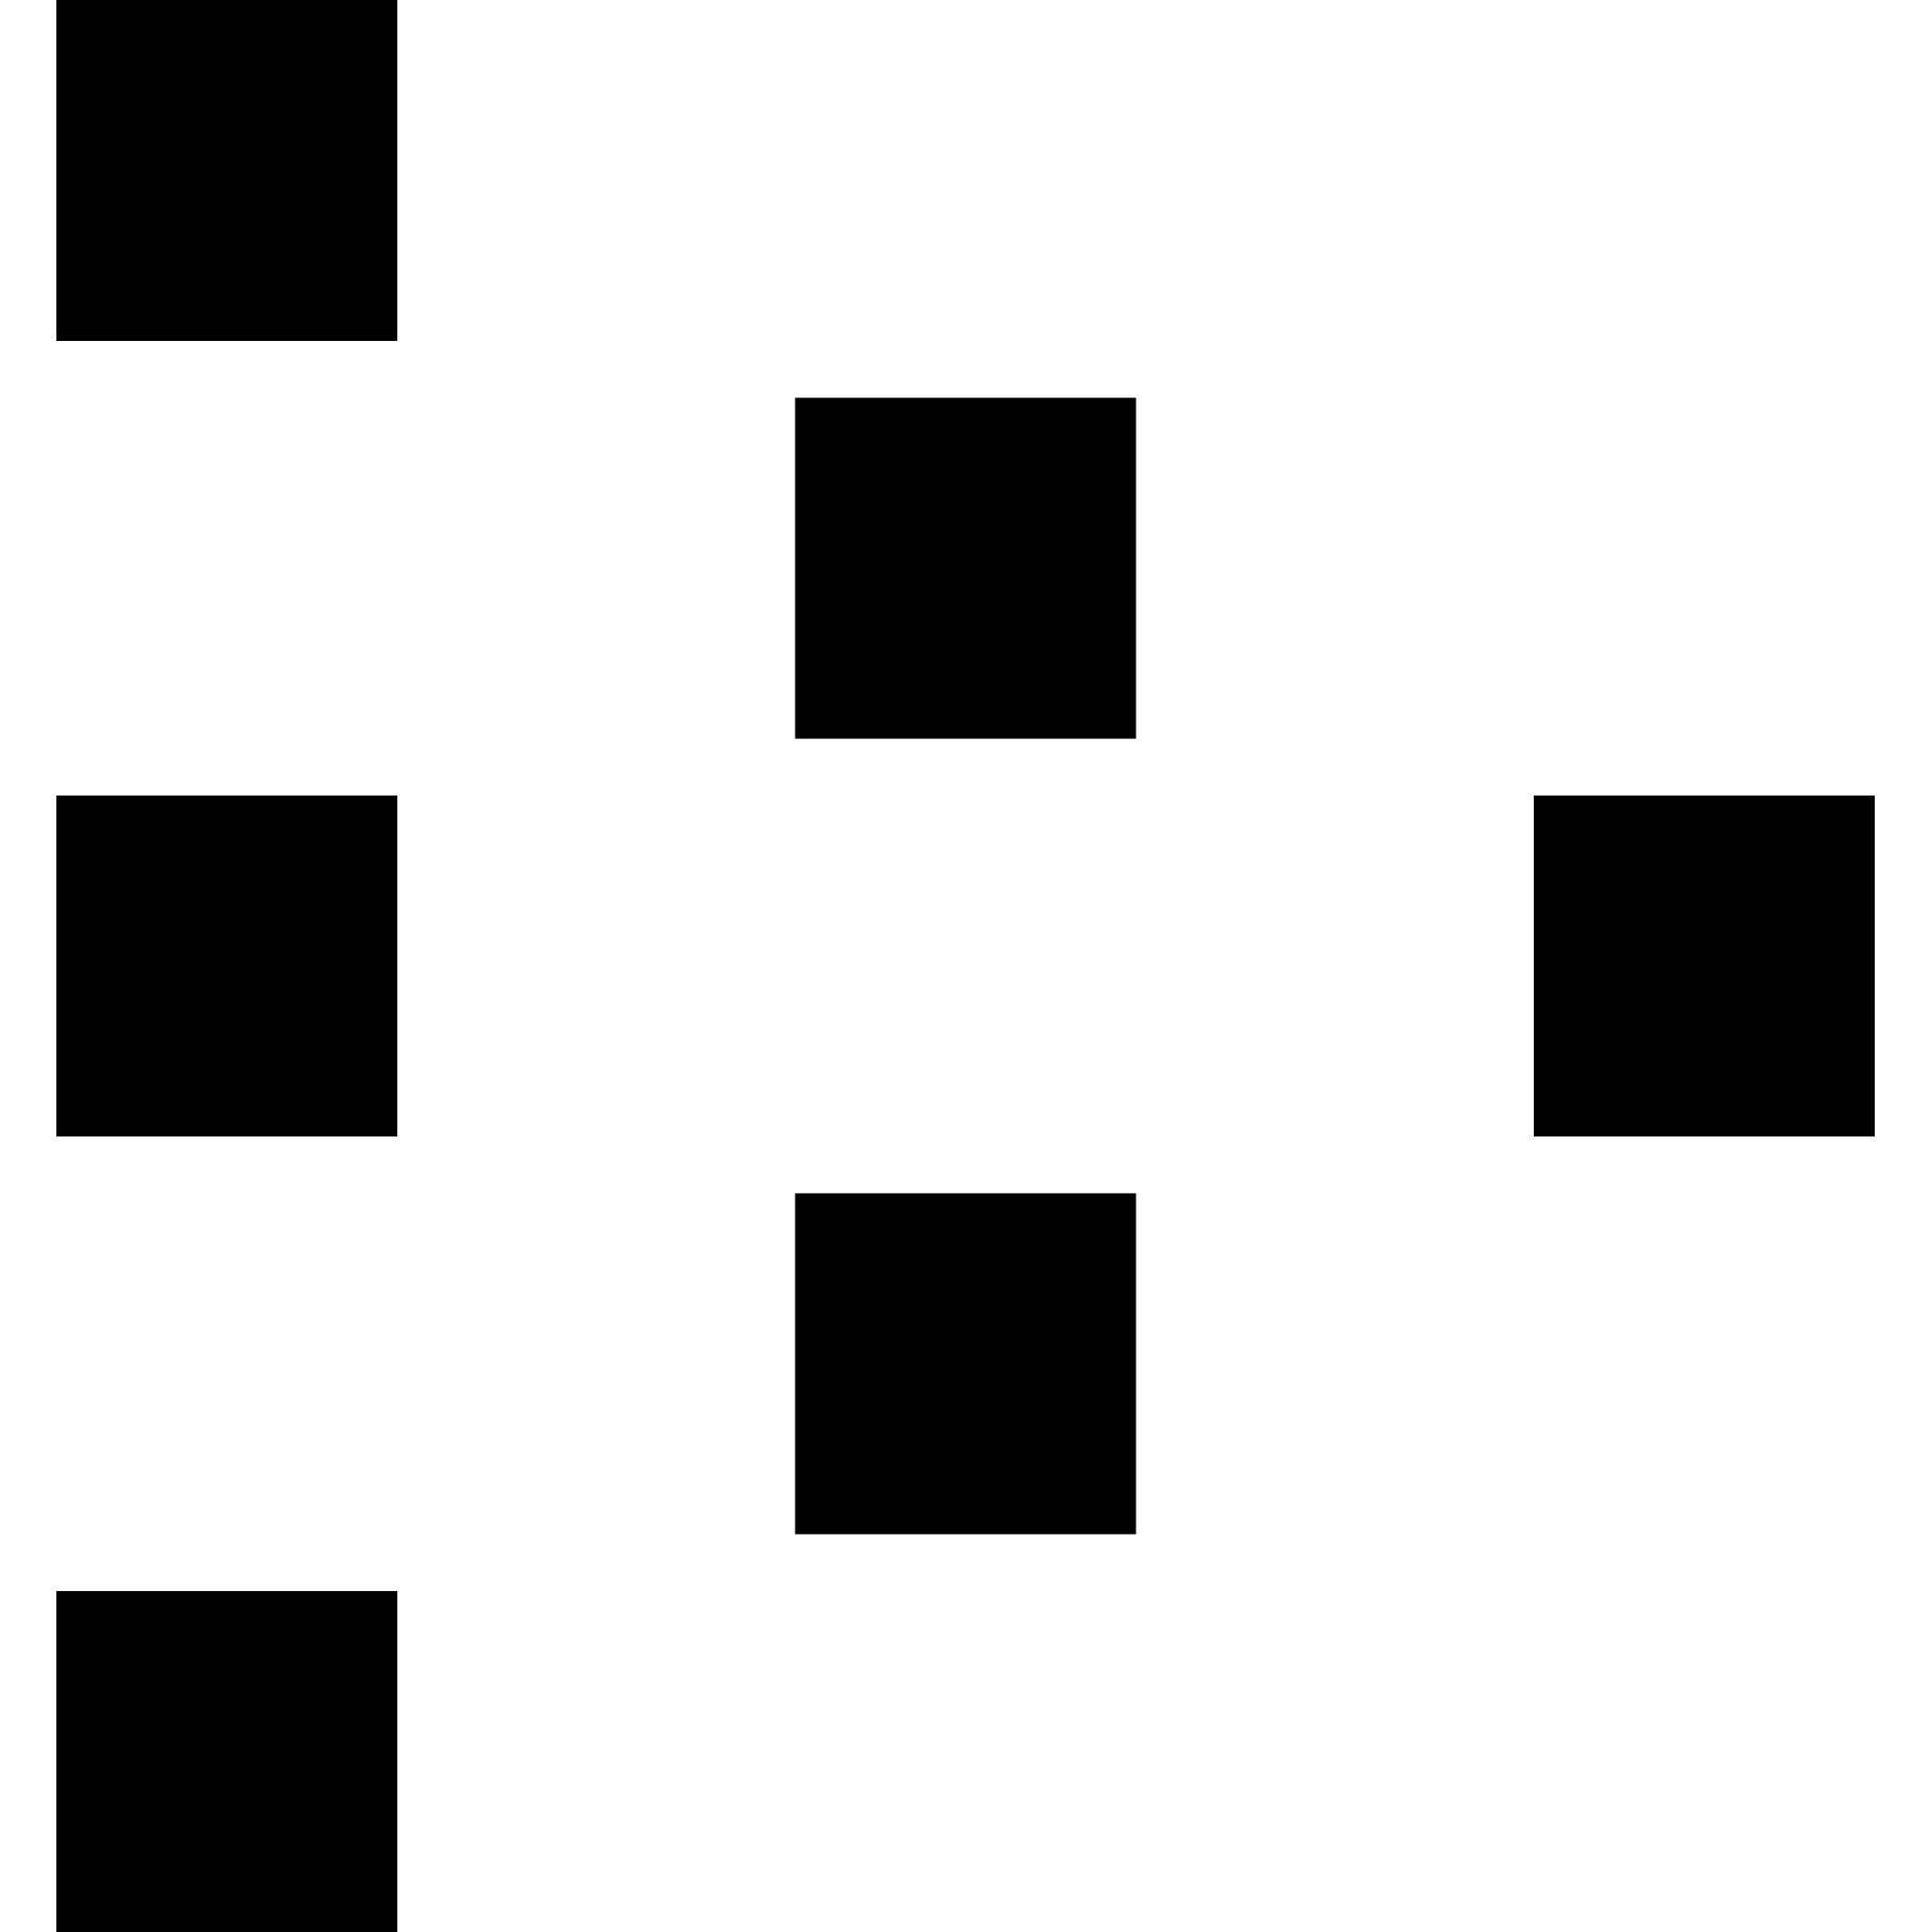 Livepeer (LPT) Logo .SVG and .PNG Files Download